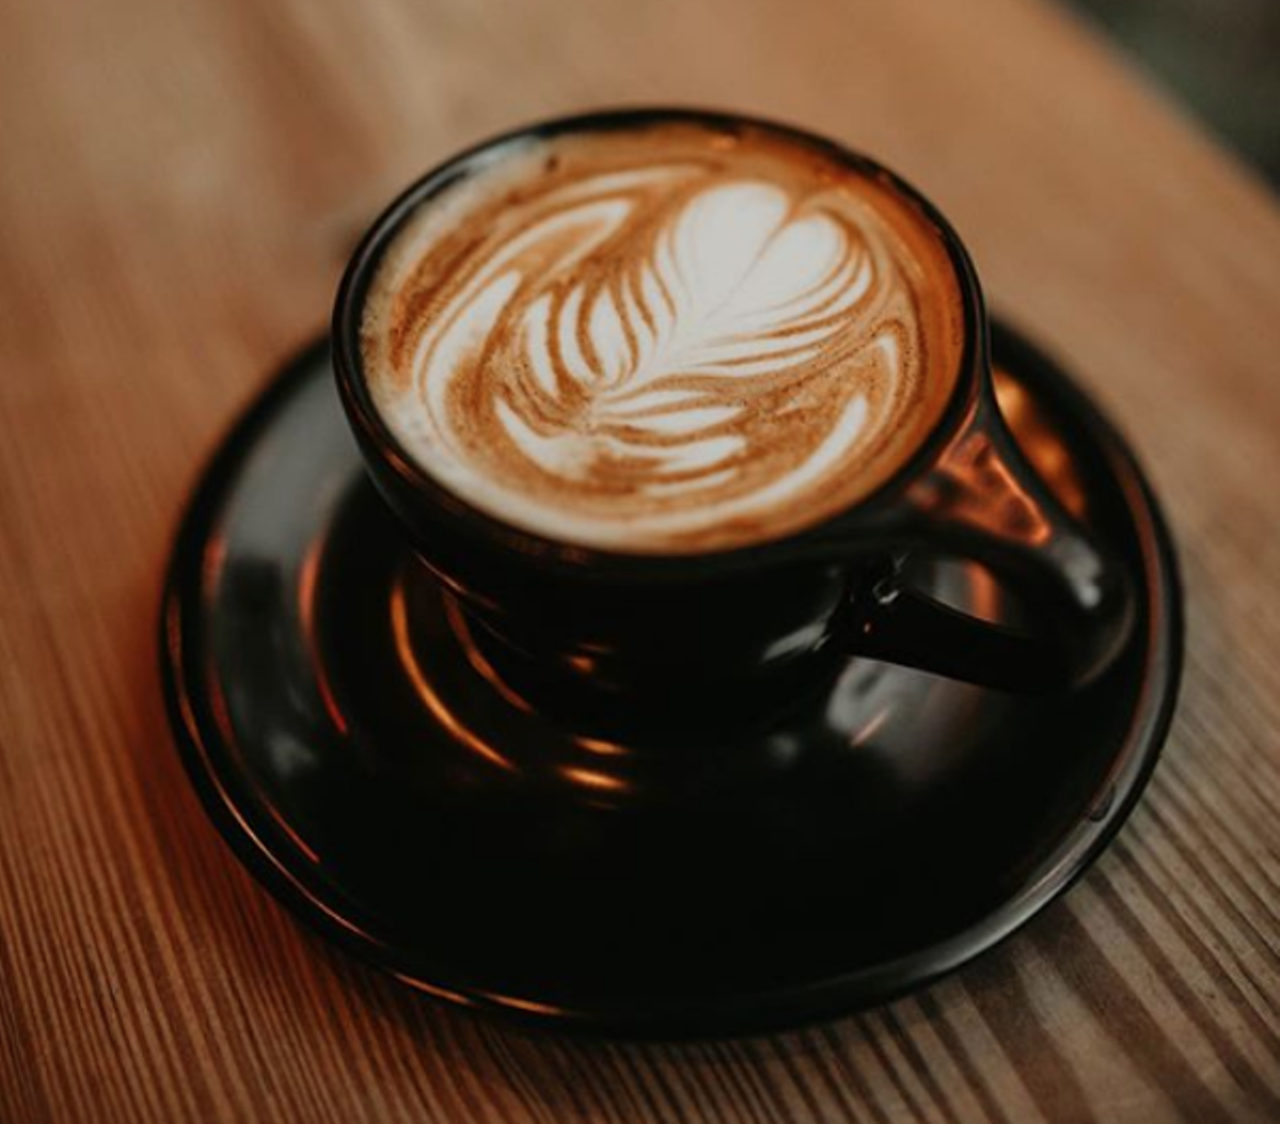 Best Coffee Shop
Local Coffee, Multiple locations, meritcoffee.com
Photo via Instagram / justjerirenee